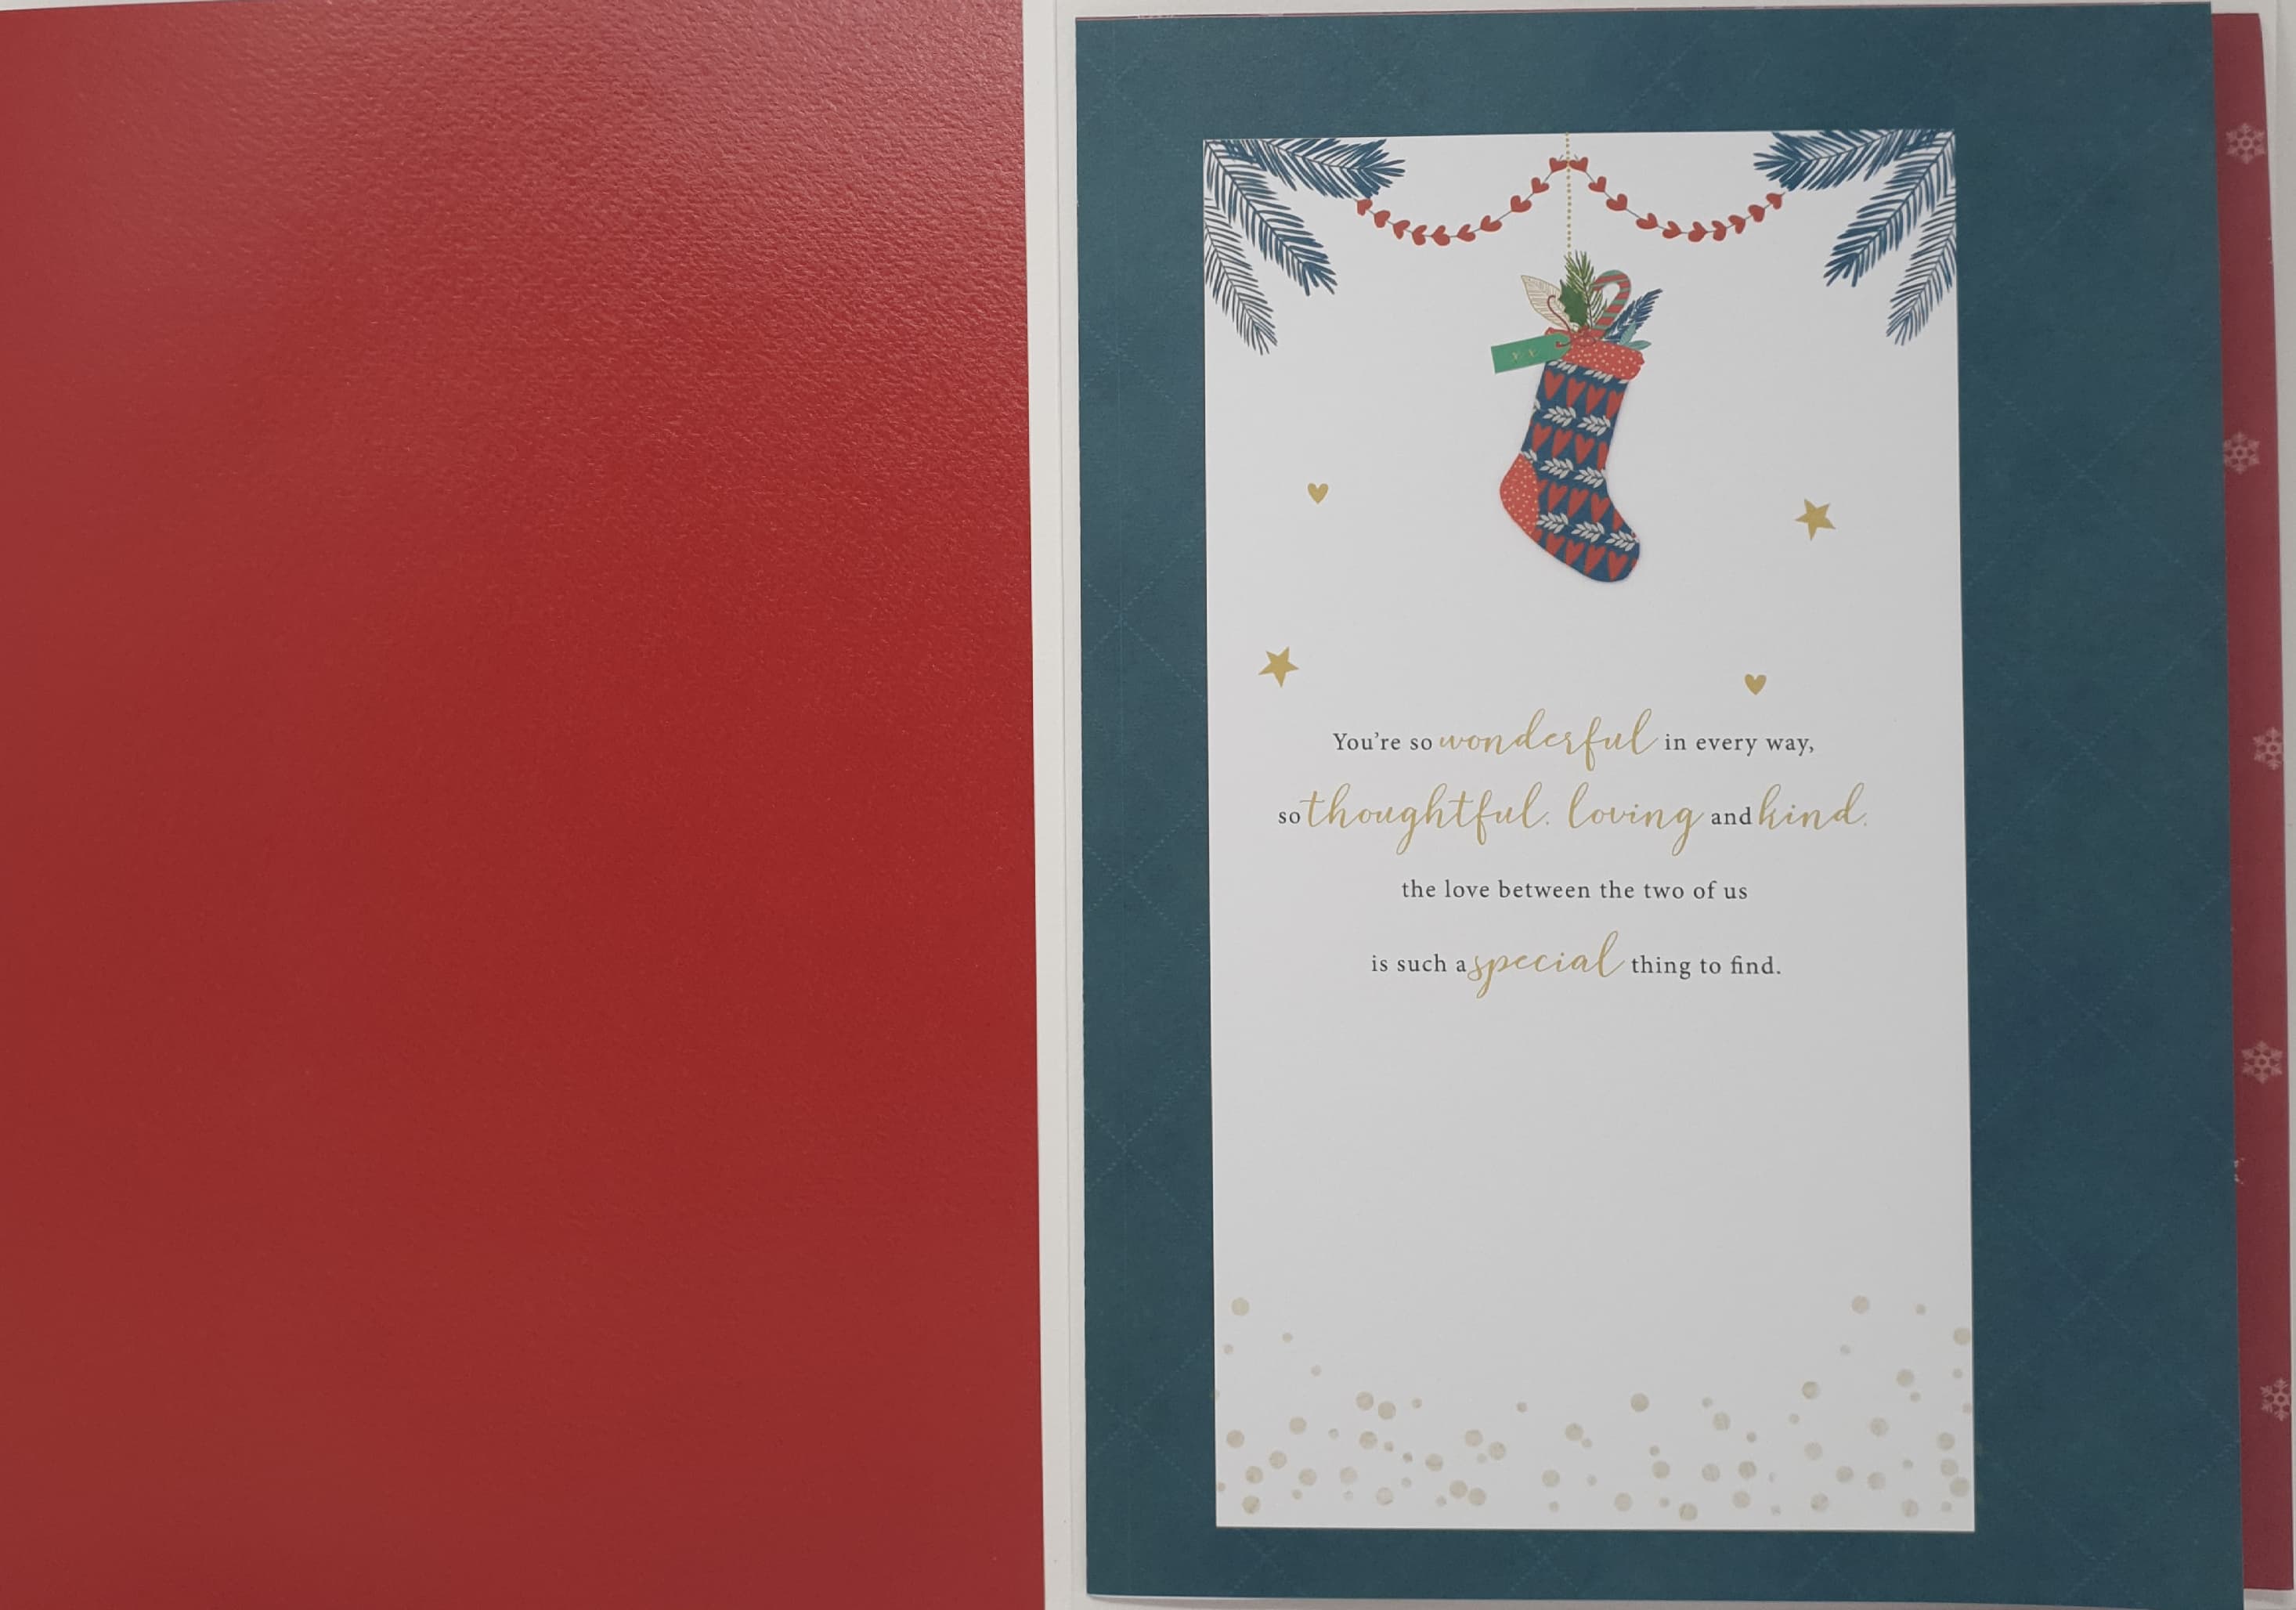 Husband Christmas Card - Two Heart Wreaths & Flowers (Card In A Presentation Box)